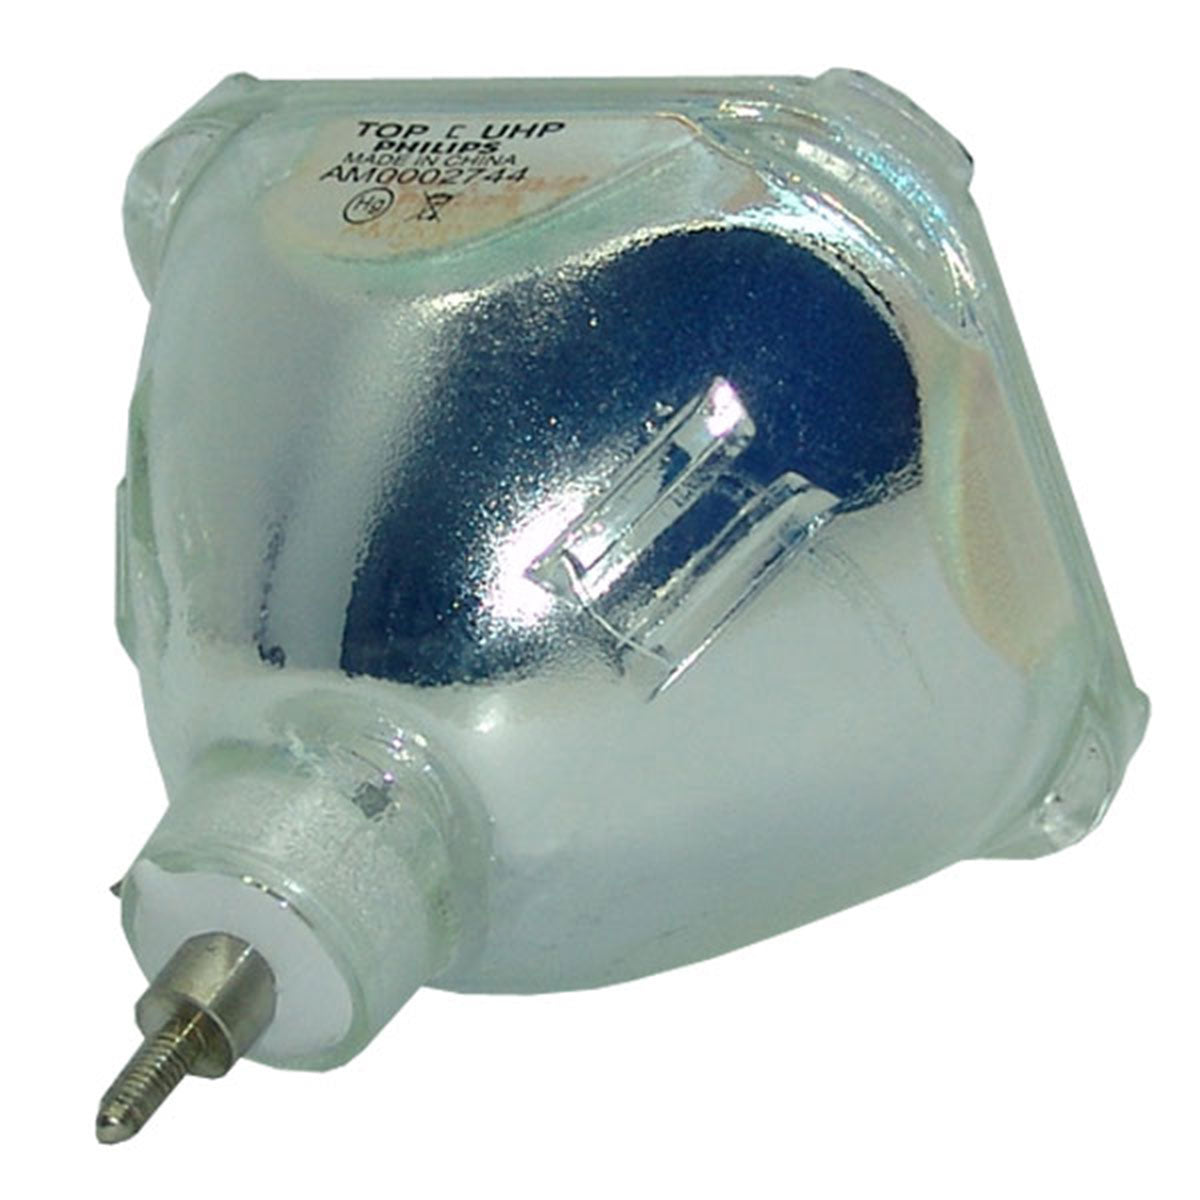 Panasonic ET-SLMP27 Philips Projector Bare Lamp